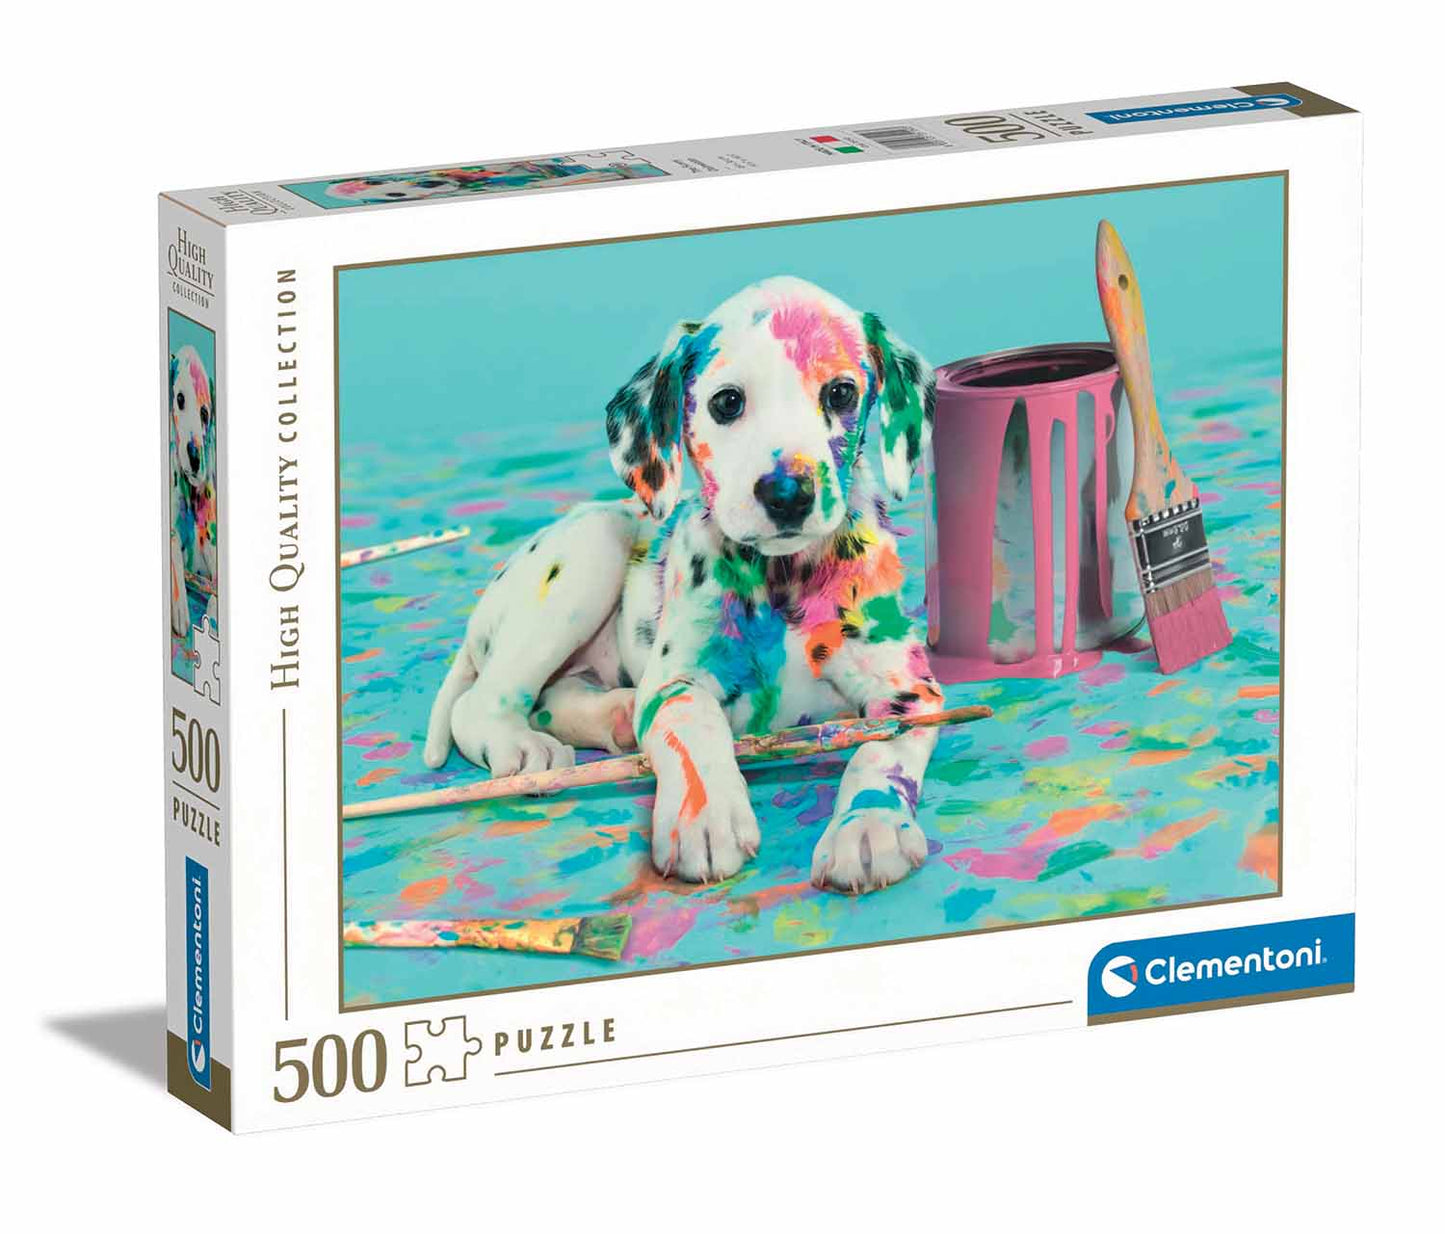 The Funny Dalmatian, Clementoni 500 Piece Puzzle